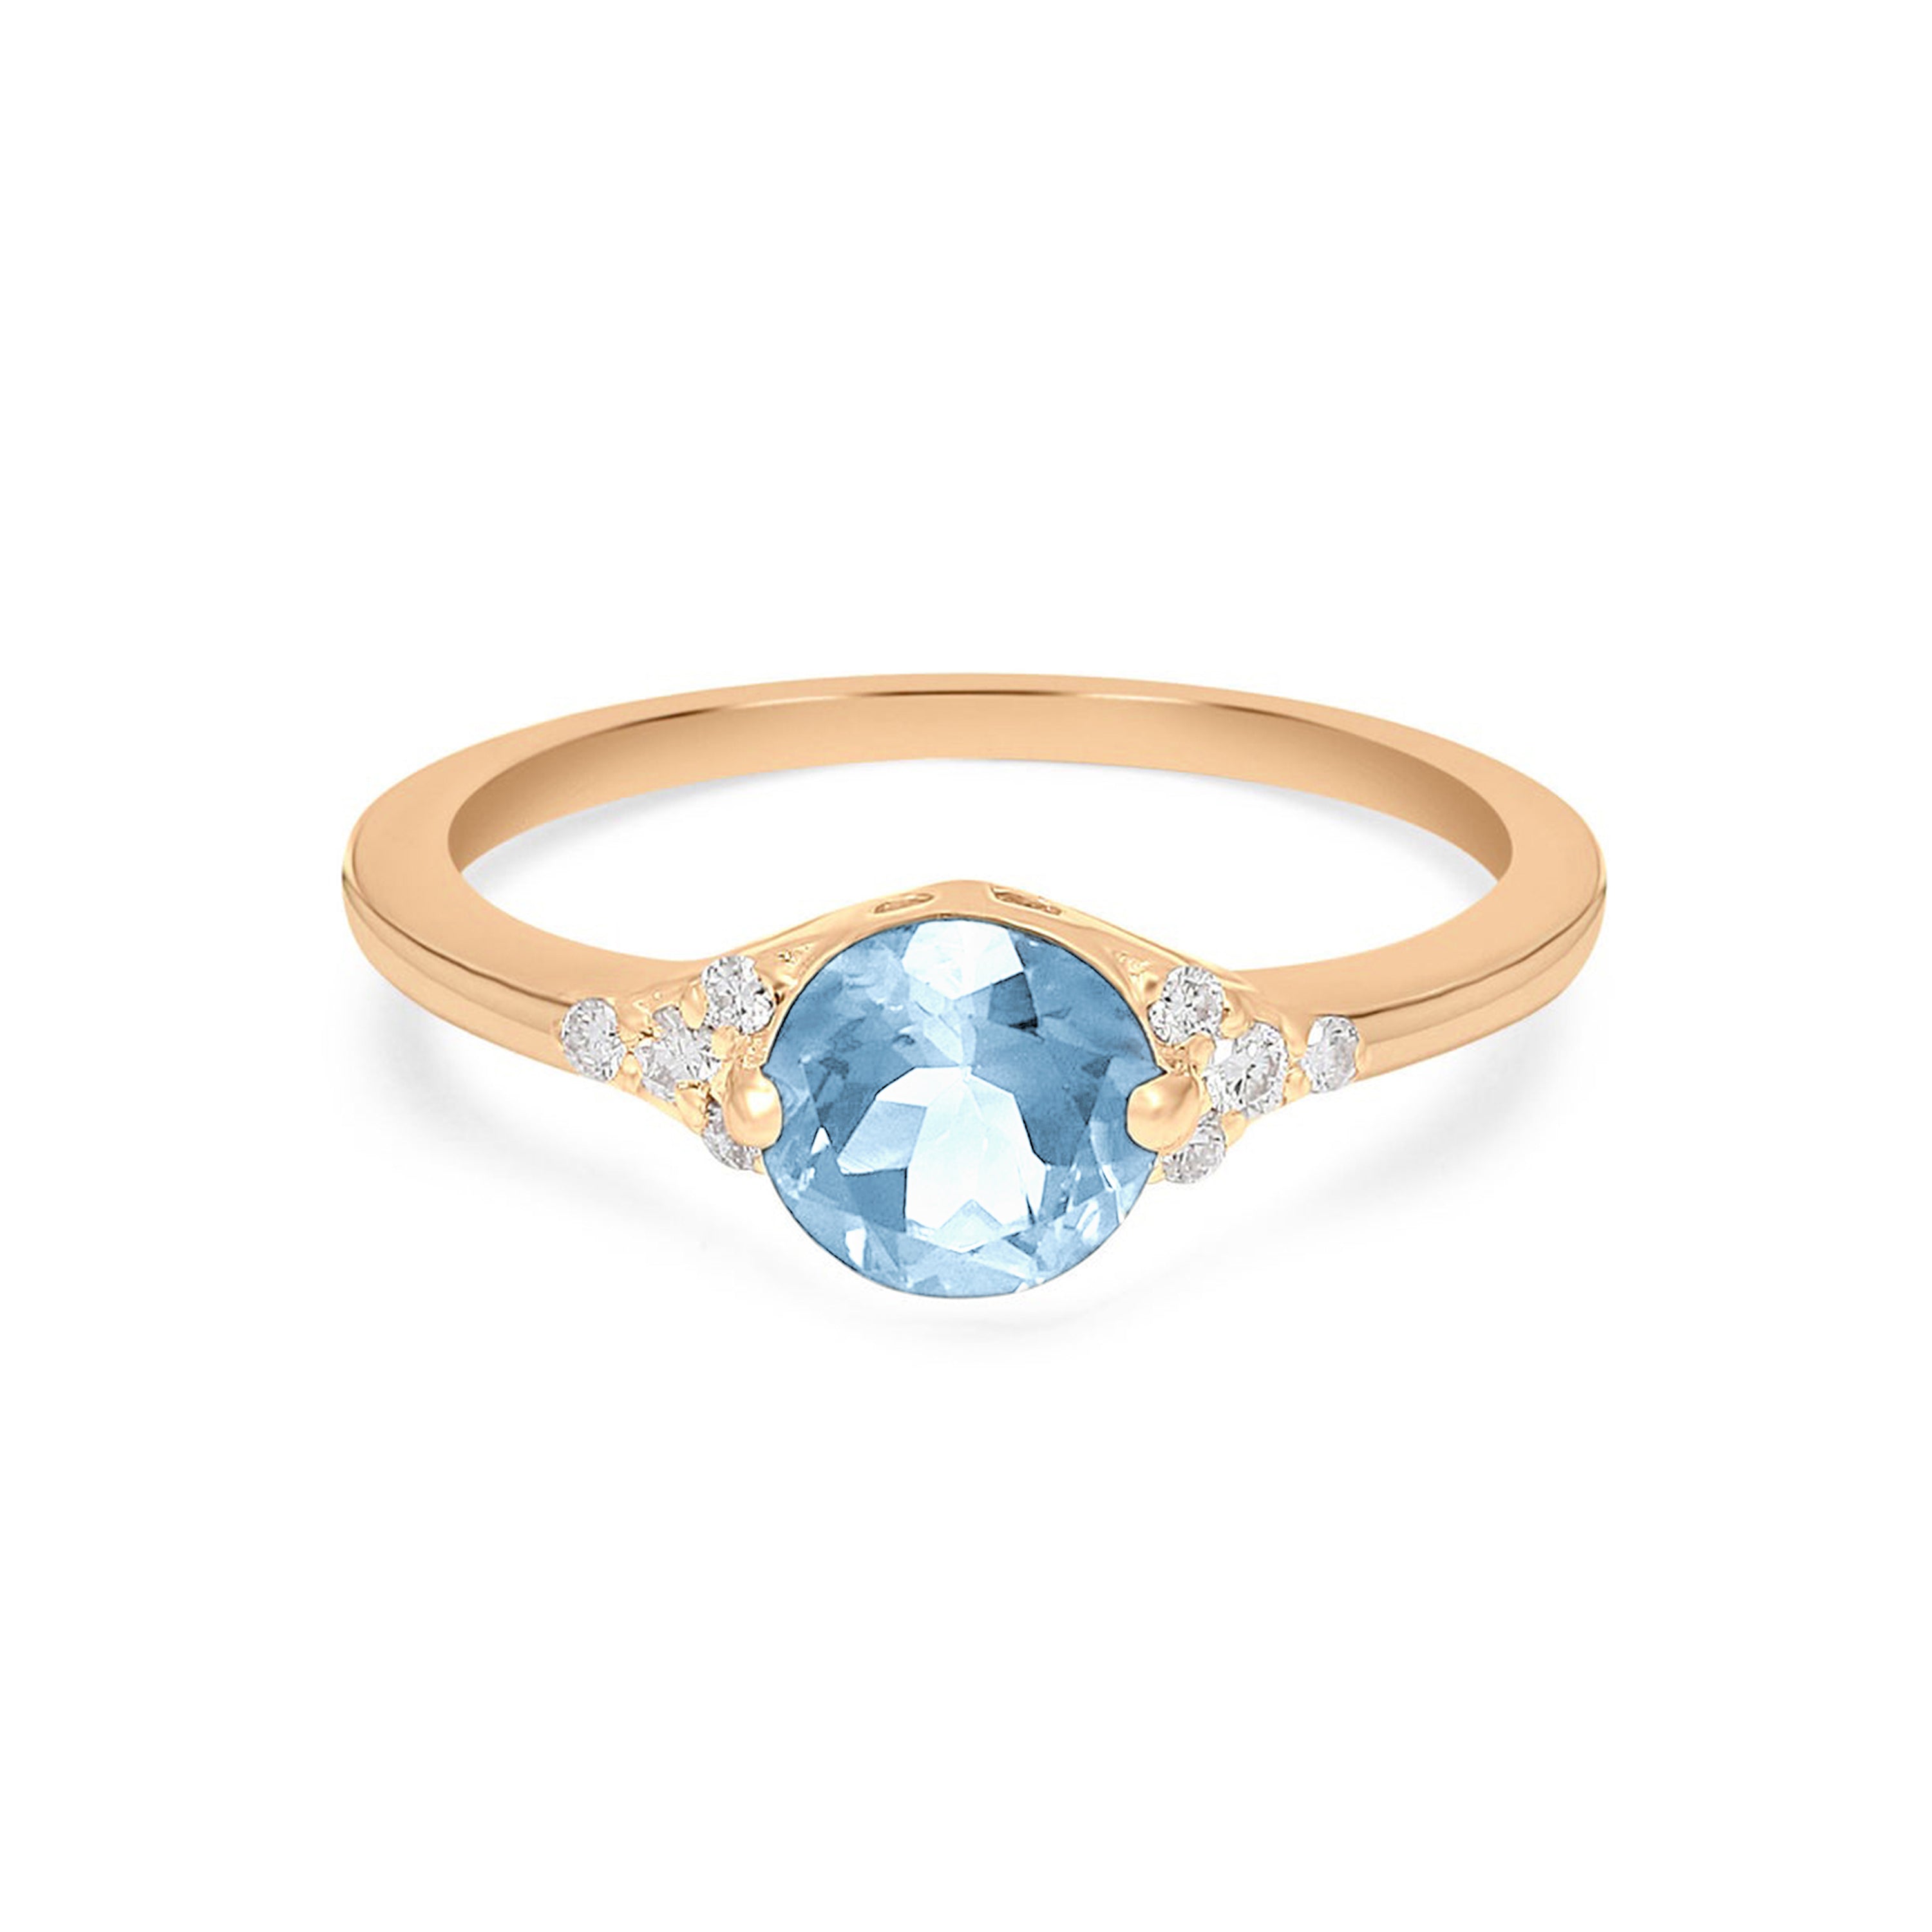 14k 18k Solid Gold Ring, Natural Aquamarine Ring, Diamond Halo Ring, Gift For Girl Friend, Gemstone Ring